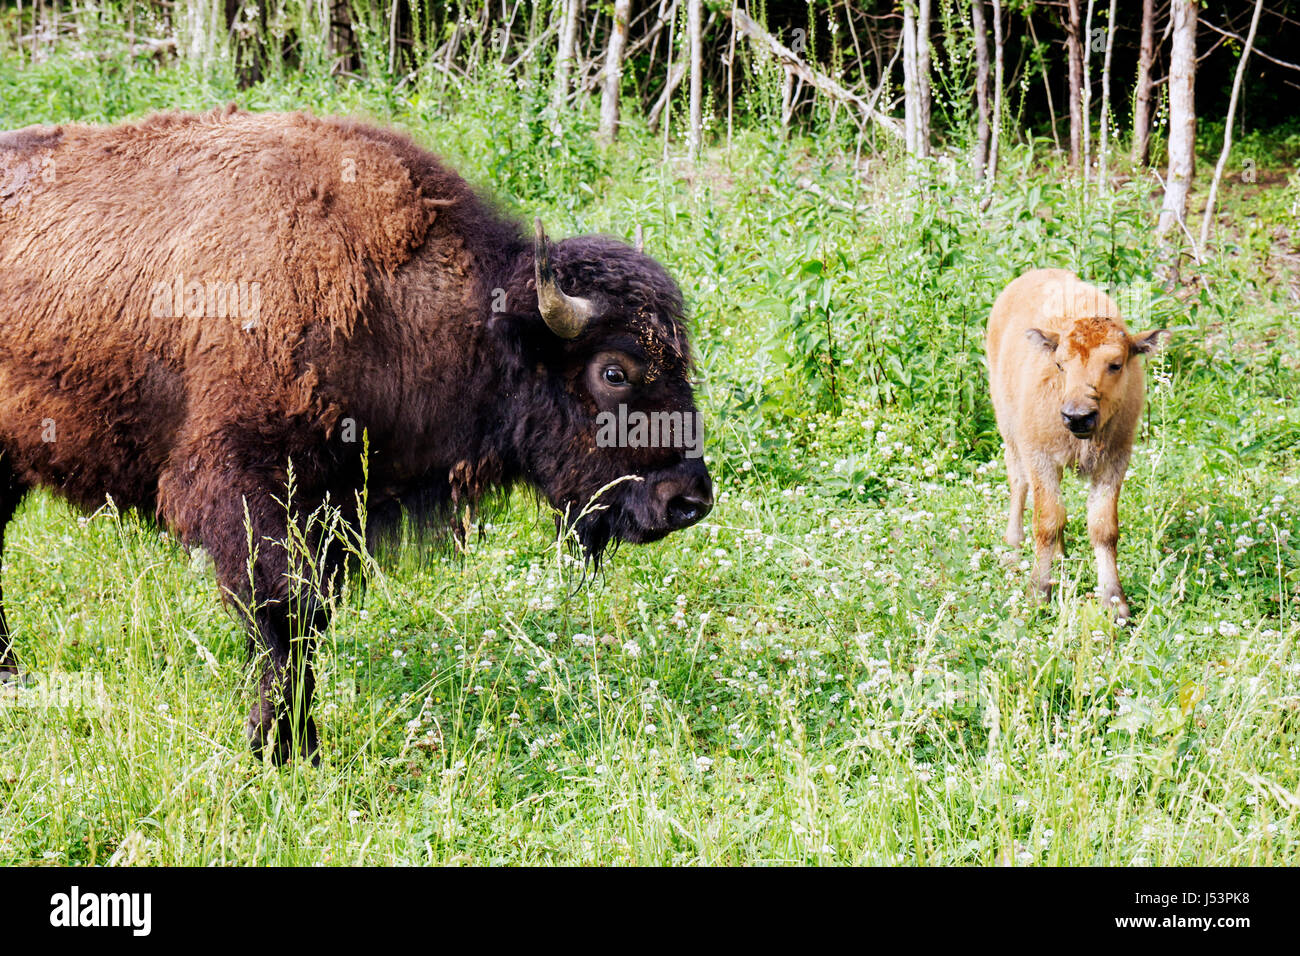 Arkansas Maynard,buffalo,animal,mammal,bovine,bison,cattle,shaggy,brown coat,herbivore,calf,protected status,symbol,graze,AR080601037 Stock Photo